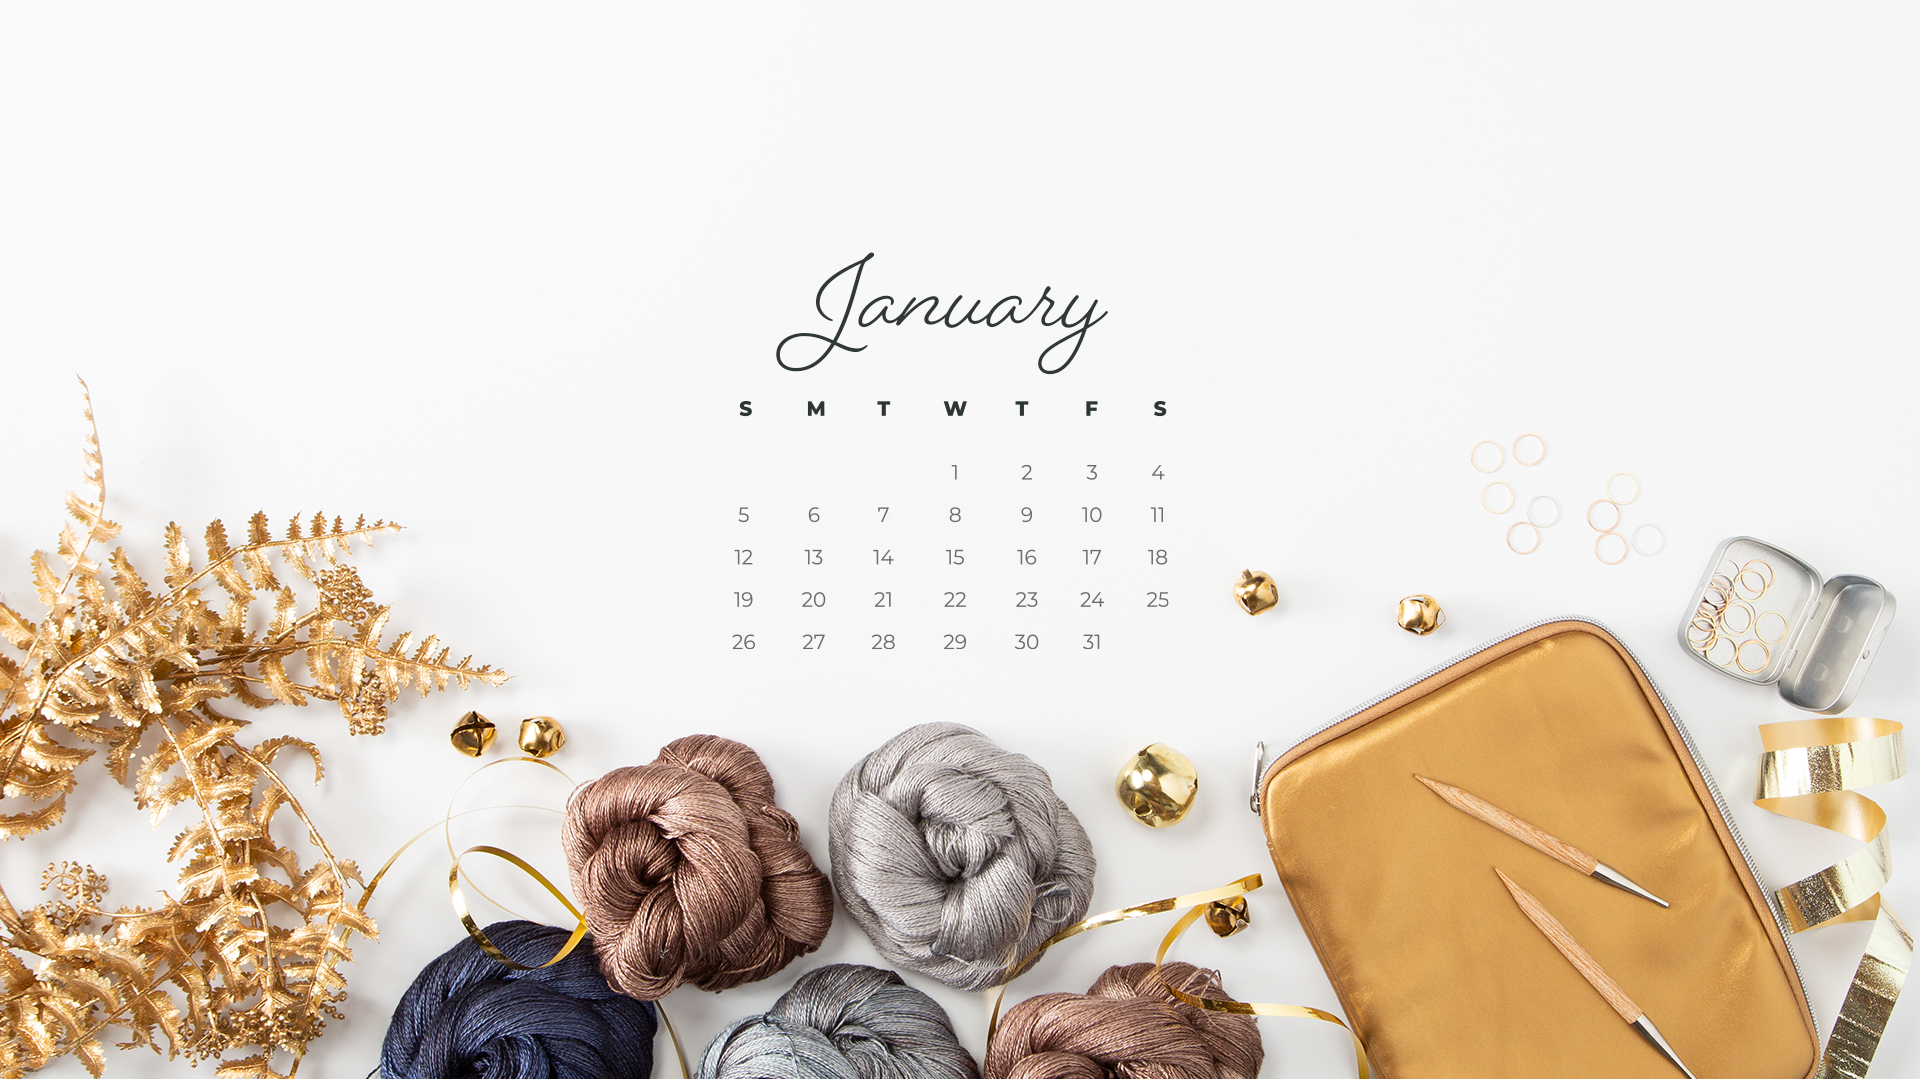 Free Downloadable January Calendar Knitpicks Staff